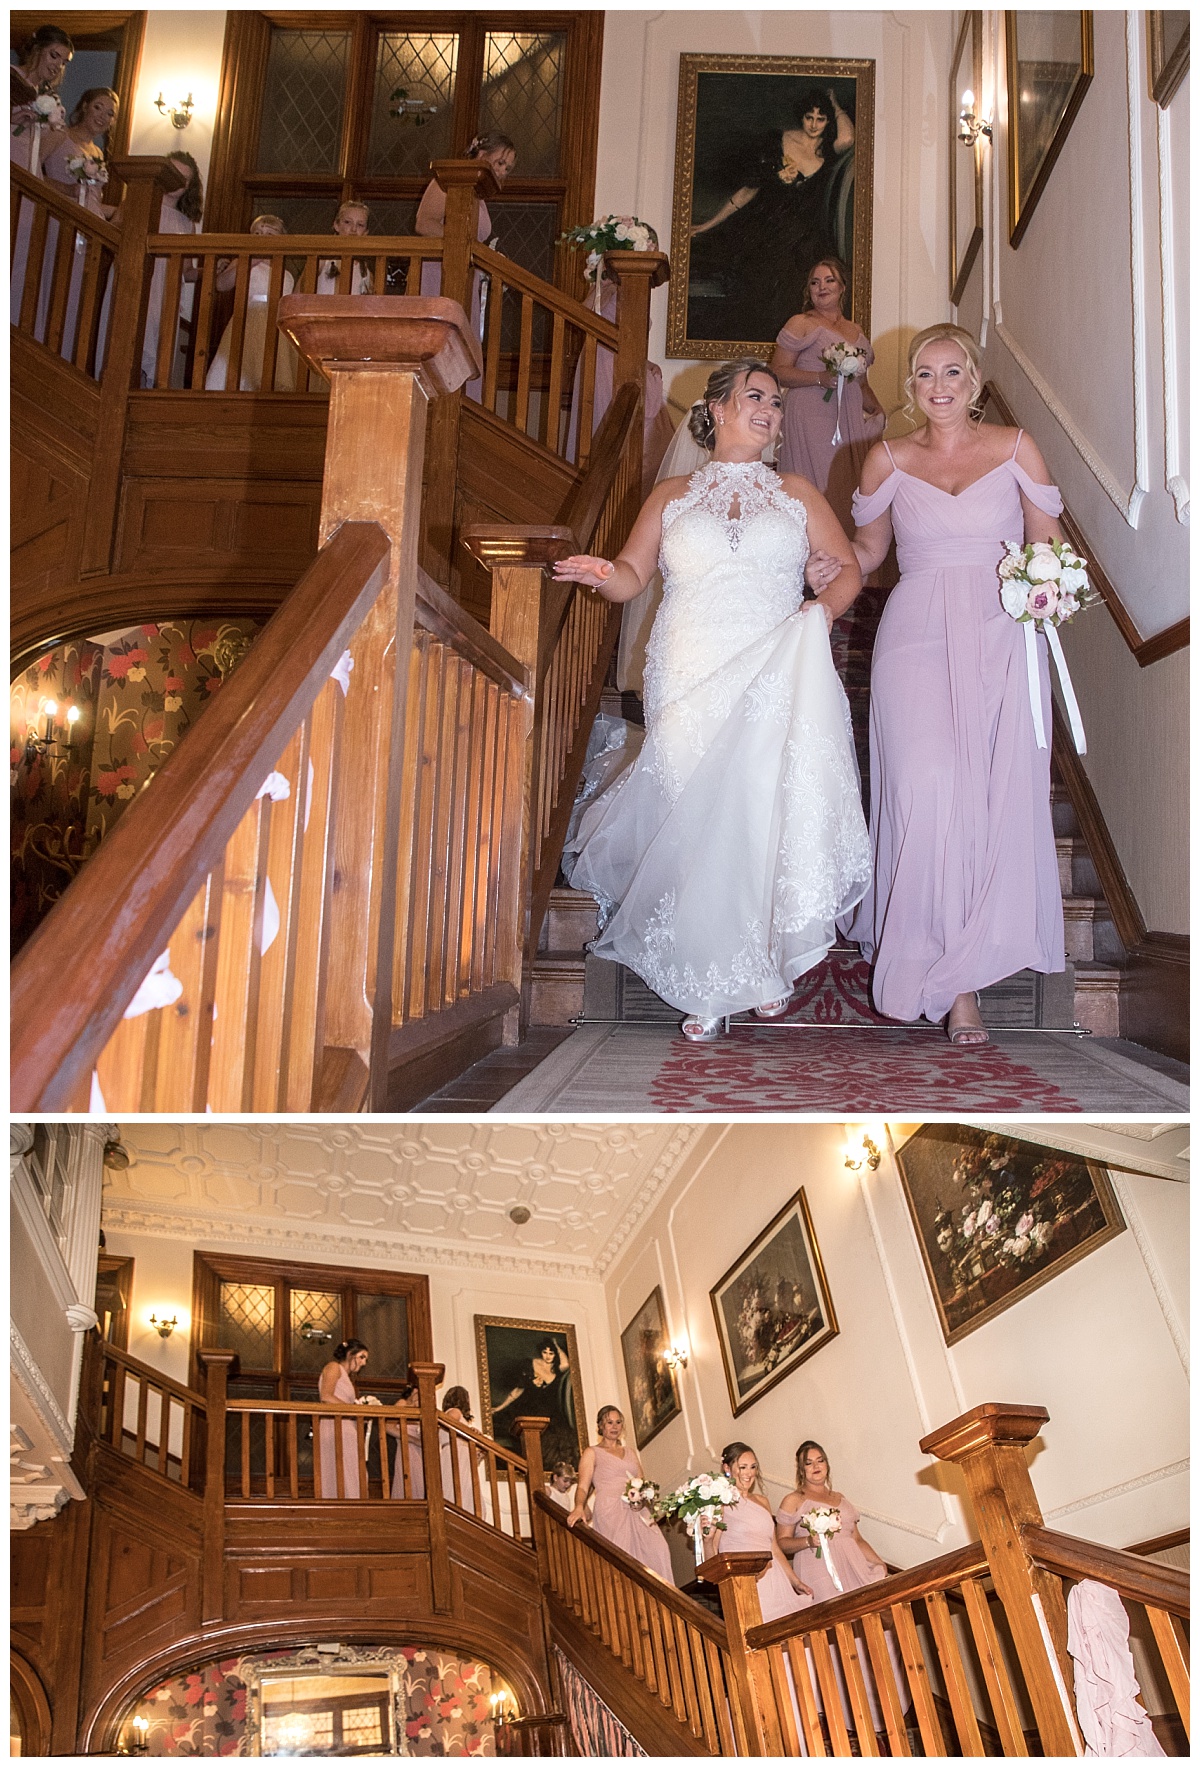 Wedding Photography Manchester - Nicky and Nichola's Nunsmere Hall Wedding Day 24